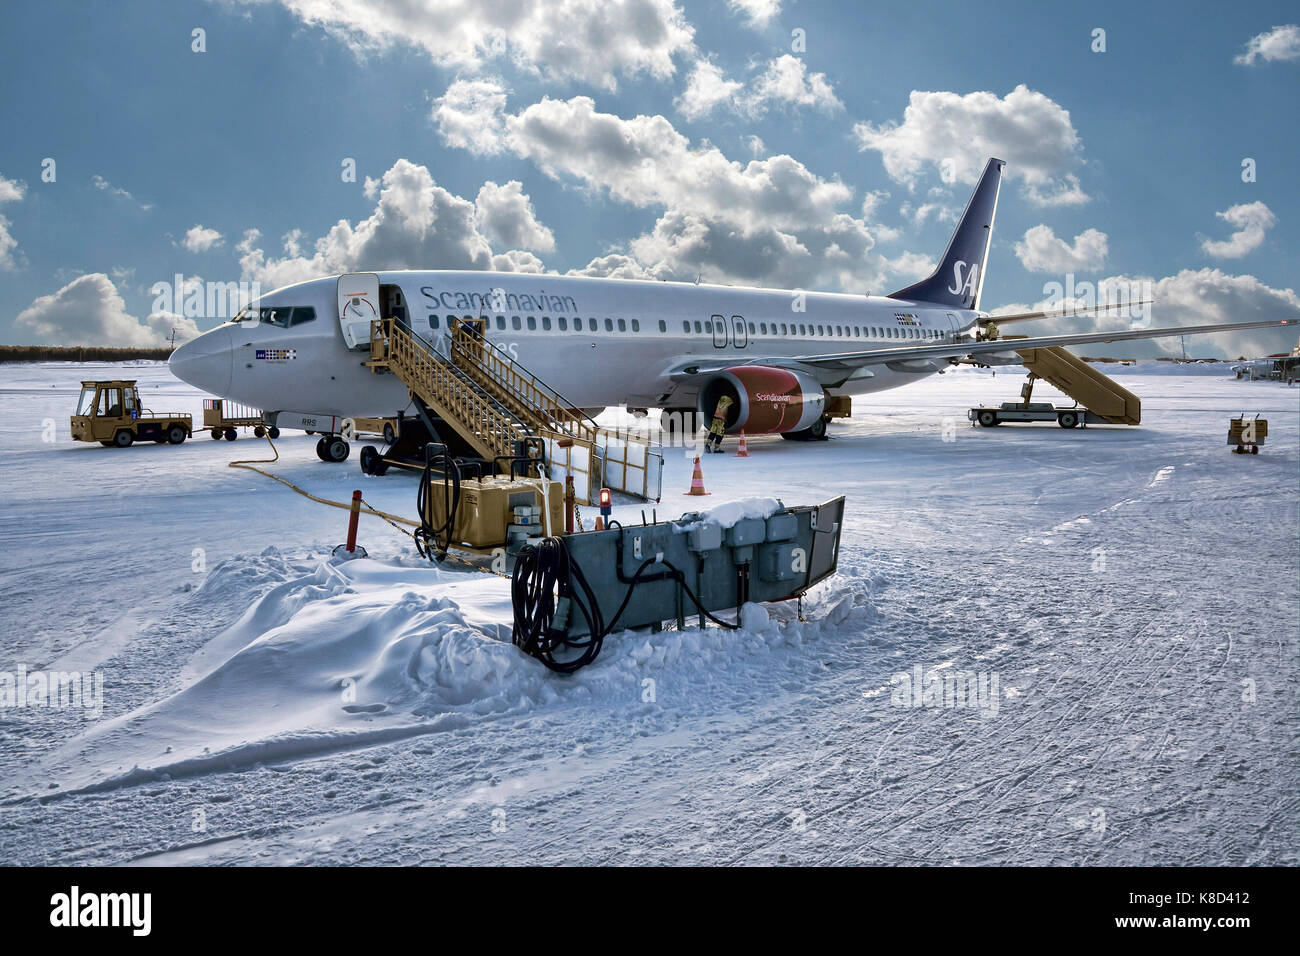 SWEDEN, KIRUNA AIRPORT - FEBRUARY 26, 2012: SAS Scandinavian airlines airplane during last control procedures before departure. Snow condition. Stock Photo